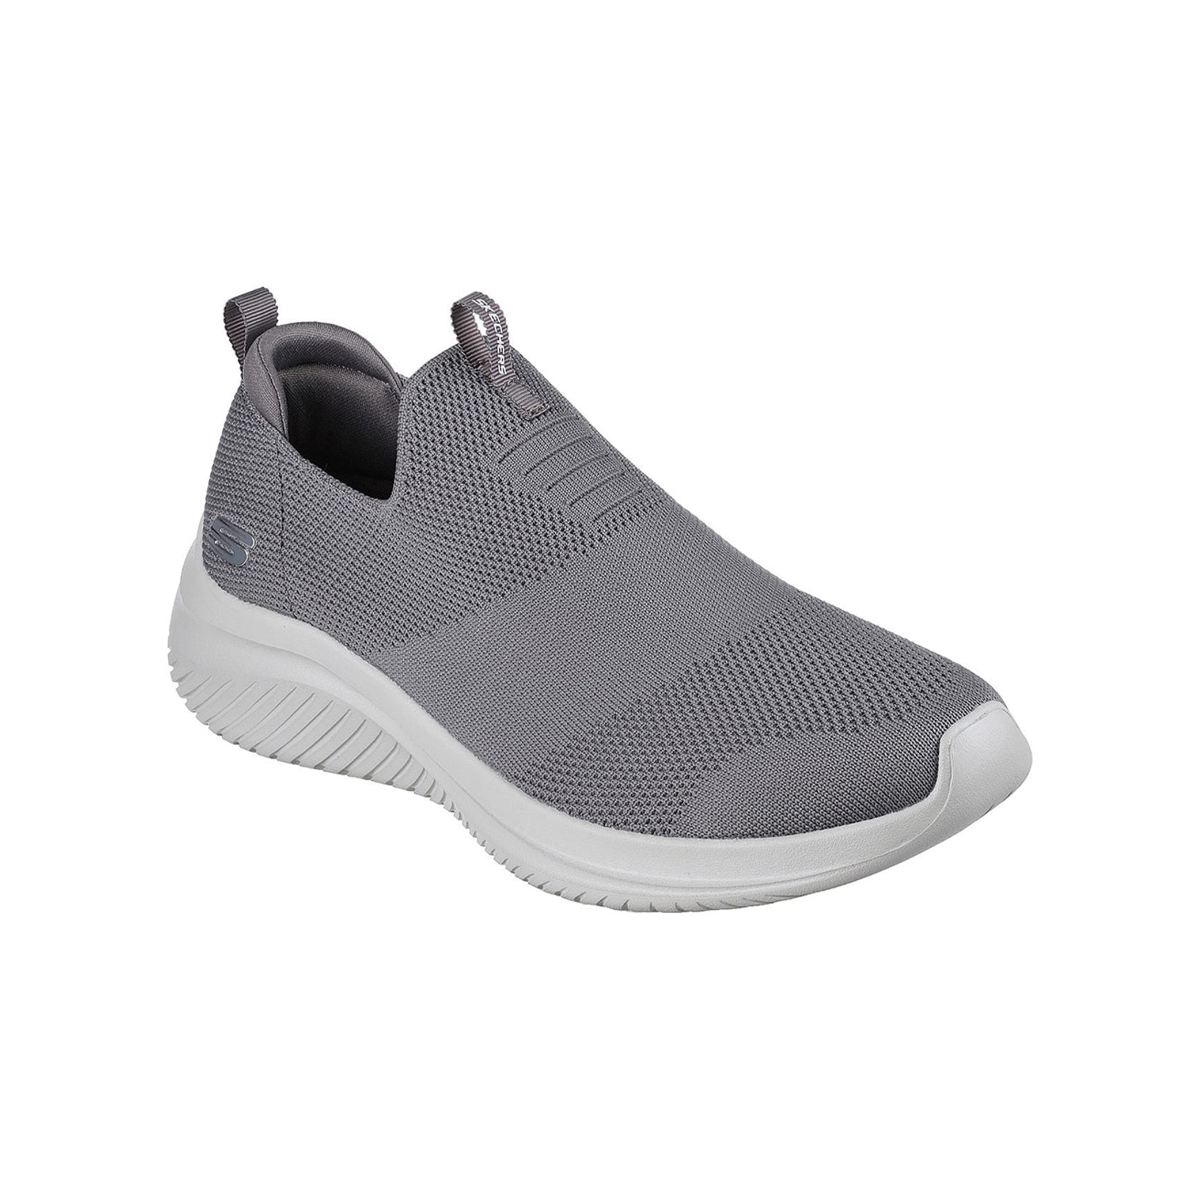 Skechers Ultra Flex 3.0 Lifestyle Shoes For Men, Charcoal